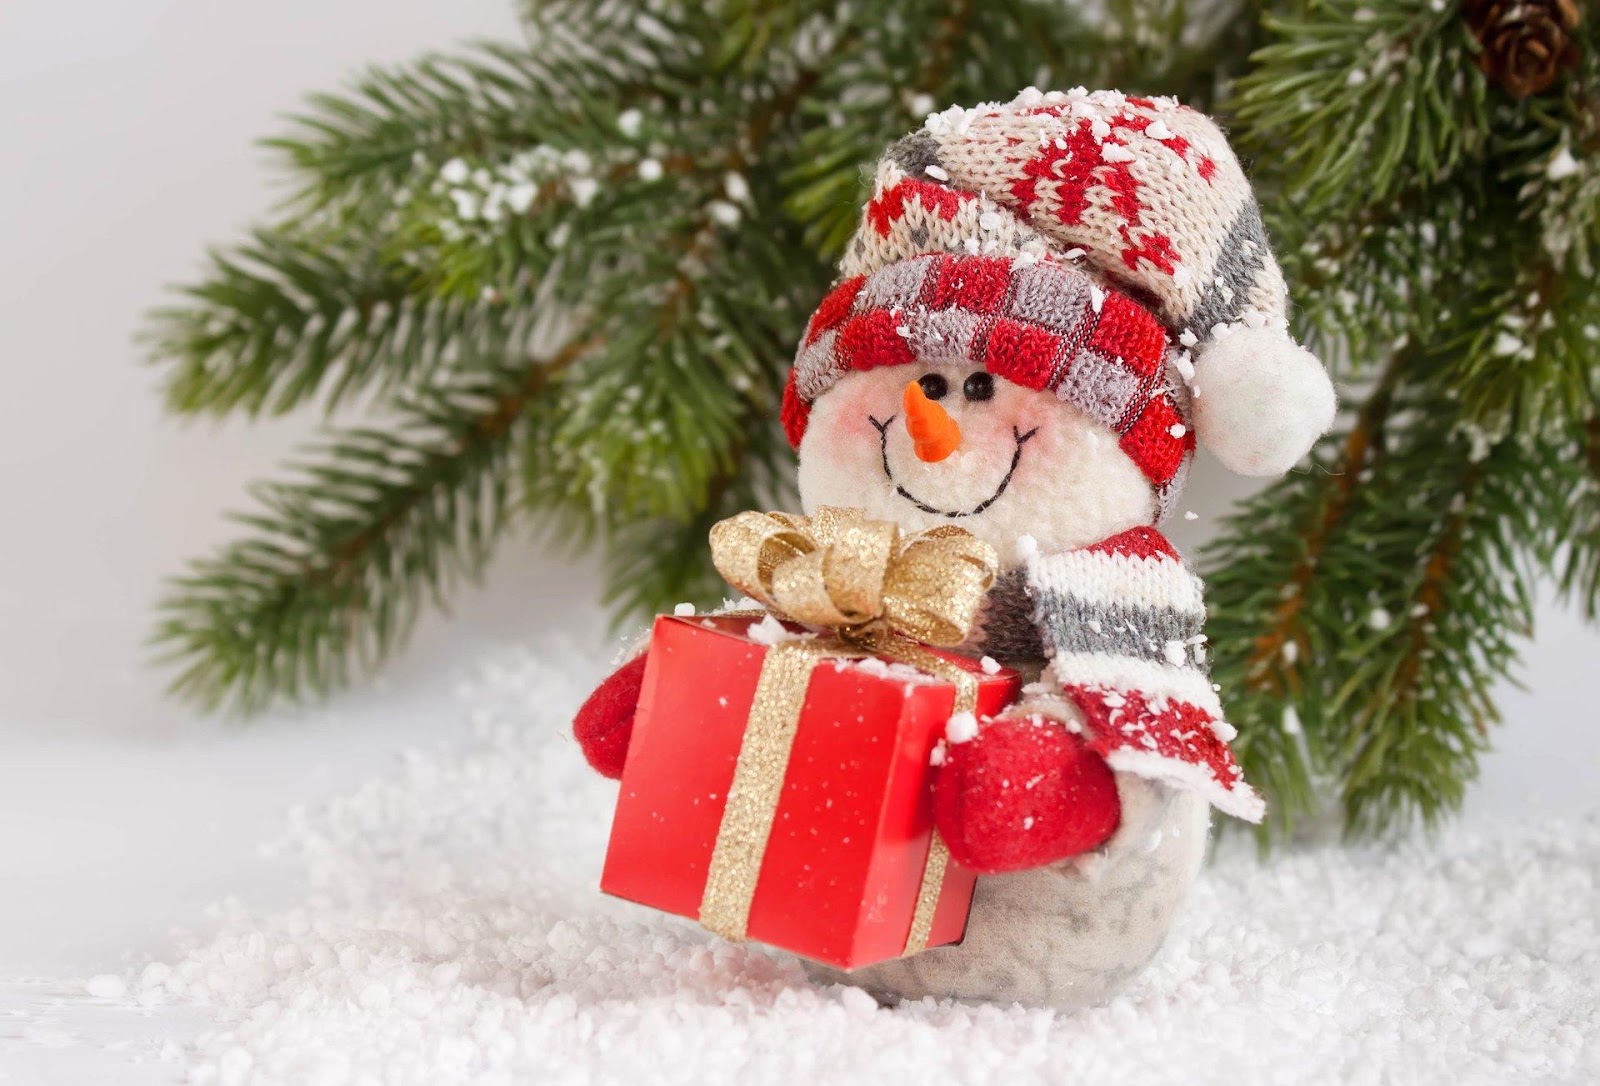 http://ferma-biz.ru/wp-content/uploads/2017/10/merry-christmas-snowman-snow-winter-gift-novyj-god-rozhdestvo-snegovik.jpg